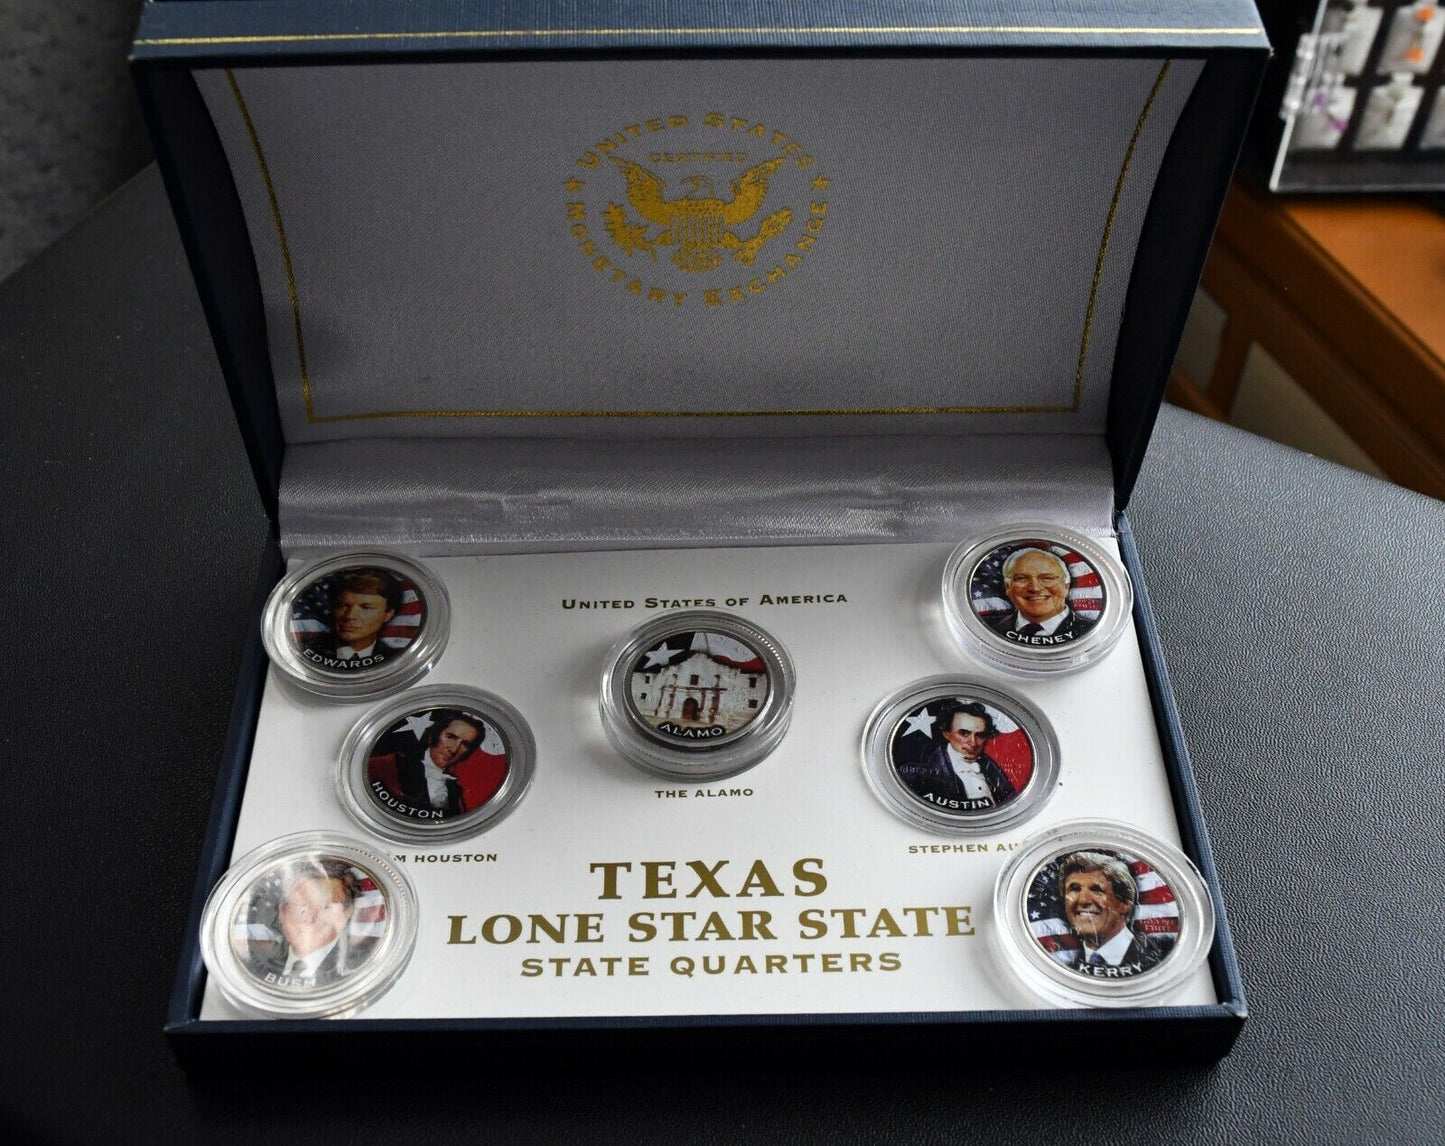 Texas Lone Star State State Quarters Monetary Exchange Bush Cheney Austin Kerry